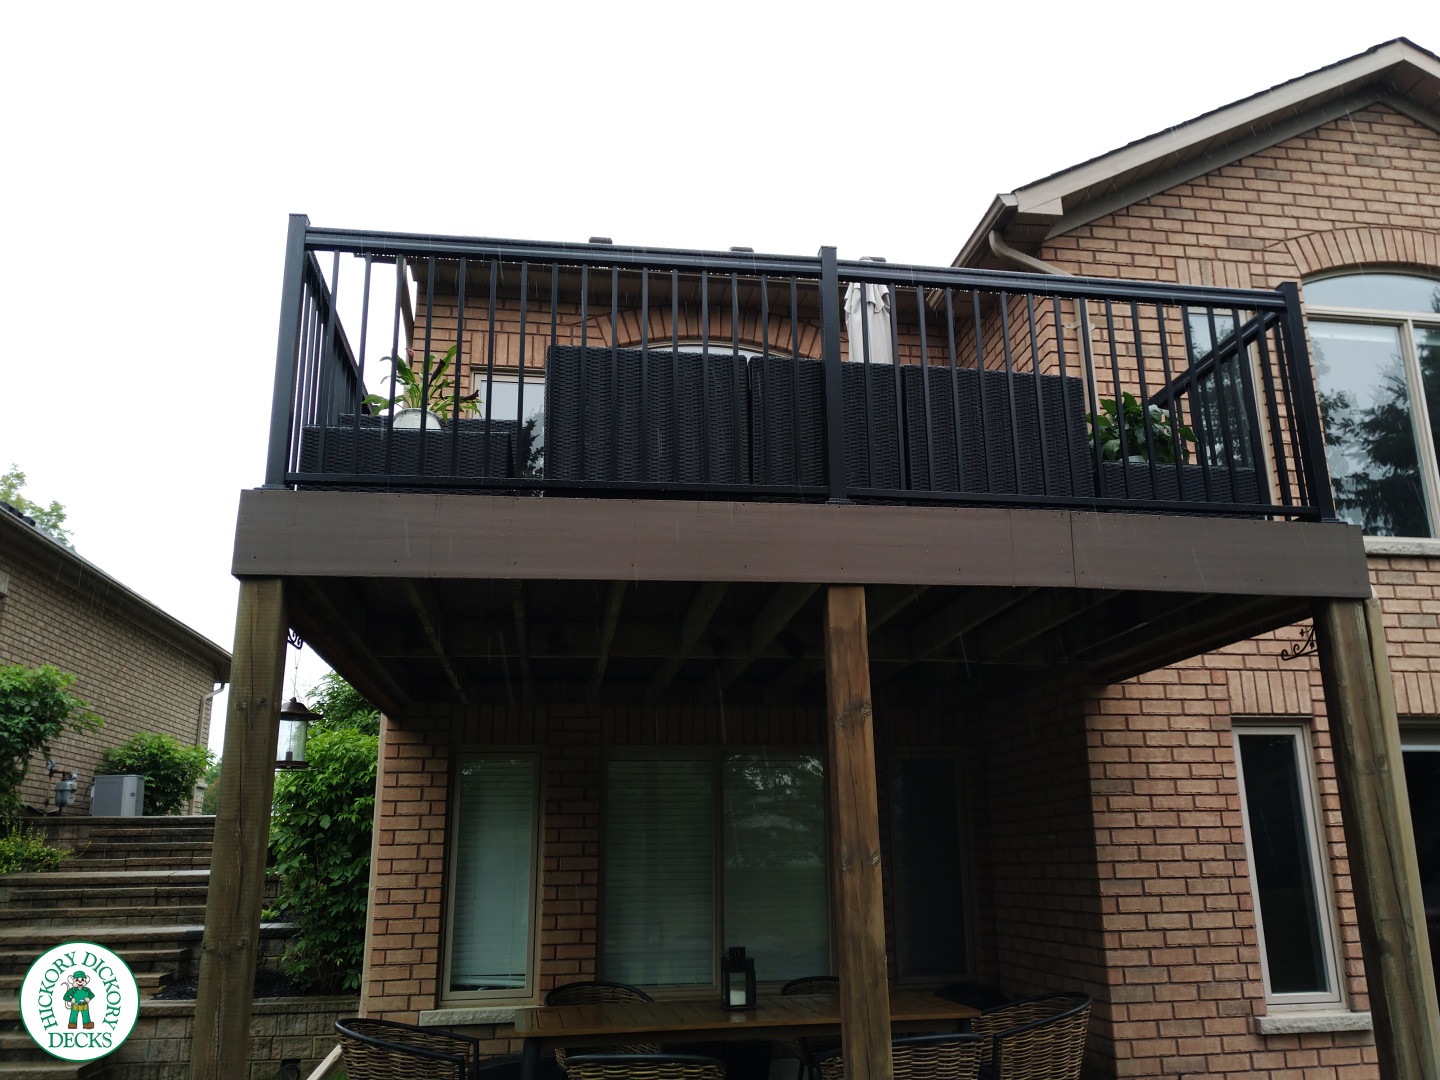 High brown azek deck with black railing.